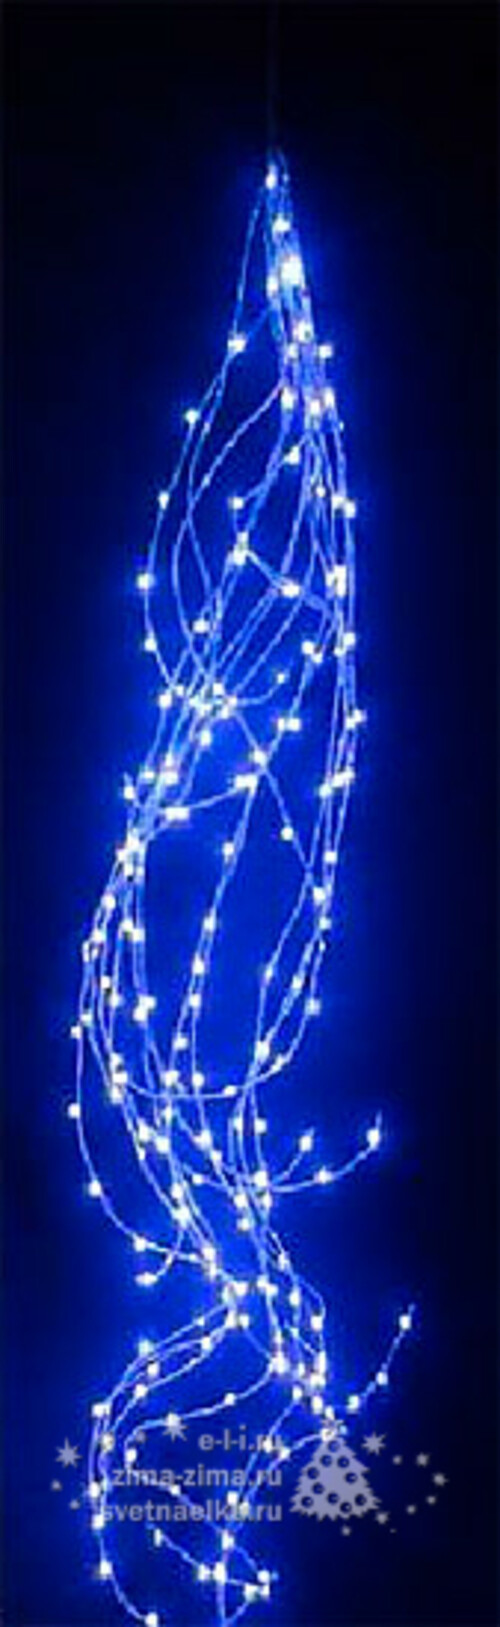 Гирлянда Хвост Роса 25*2.5 м, 700 синих MINILED ламп, серебряная проволока BEAUTY LED